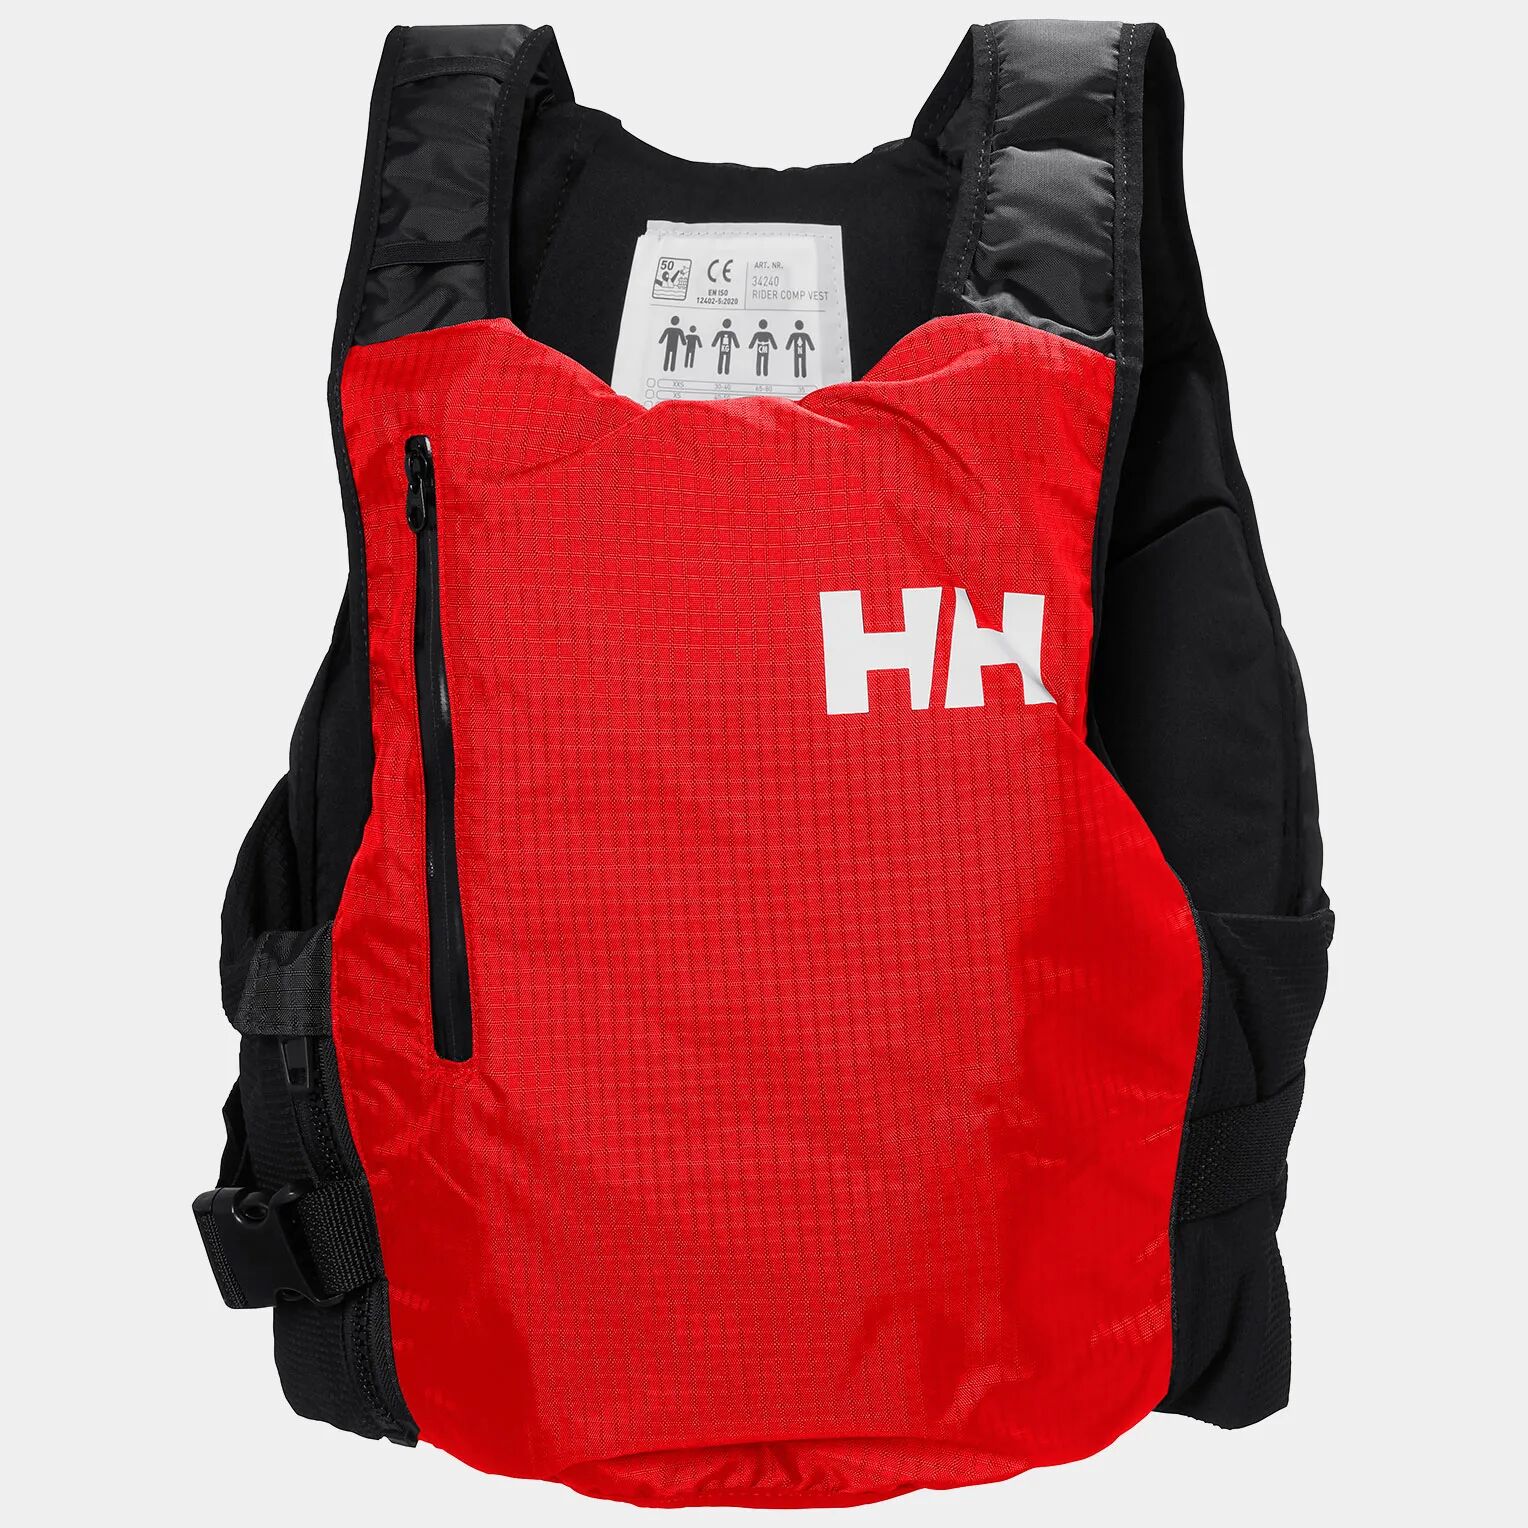 Helly Hansen Rider Foil Race Life Jacket Red 30/40KG - Alert Red - Unisex